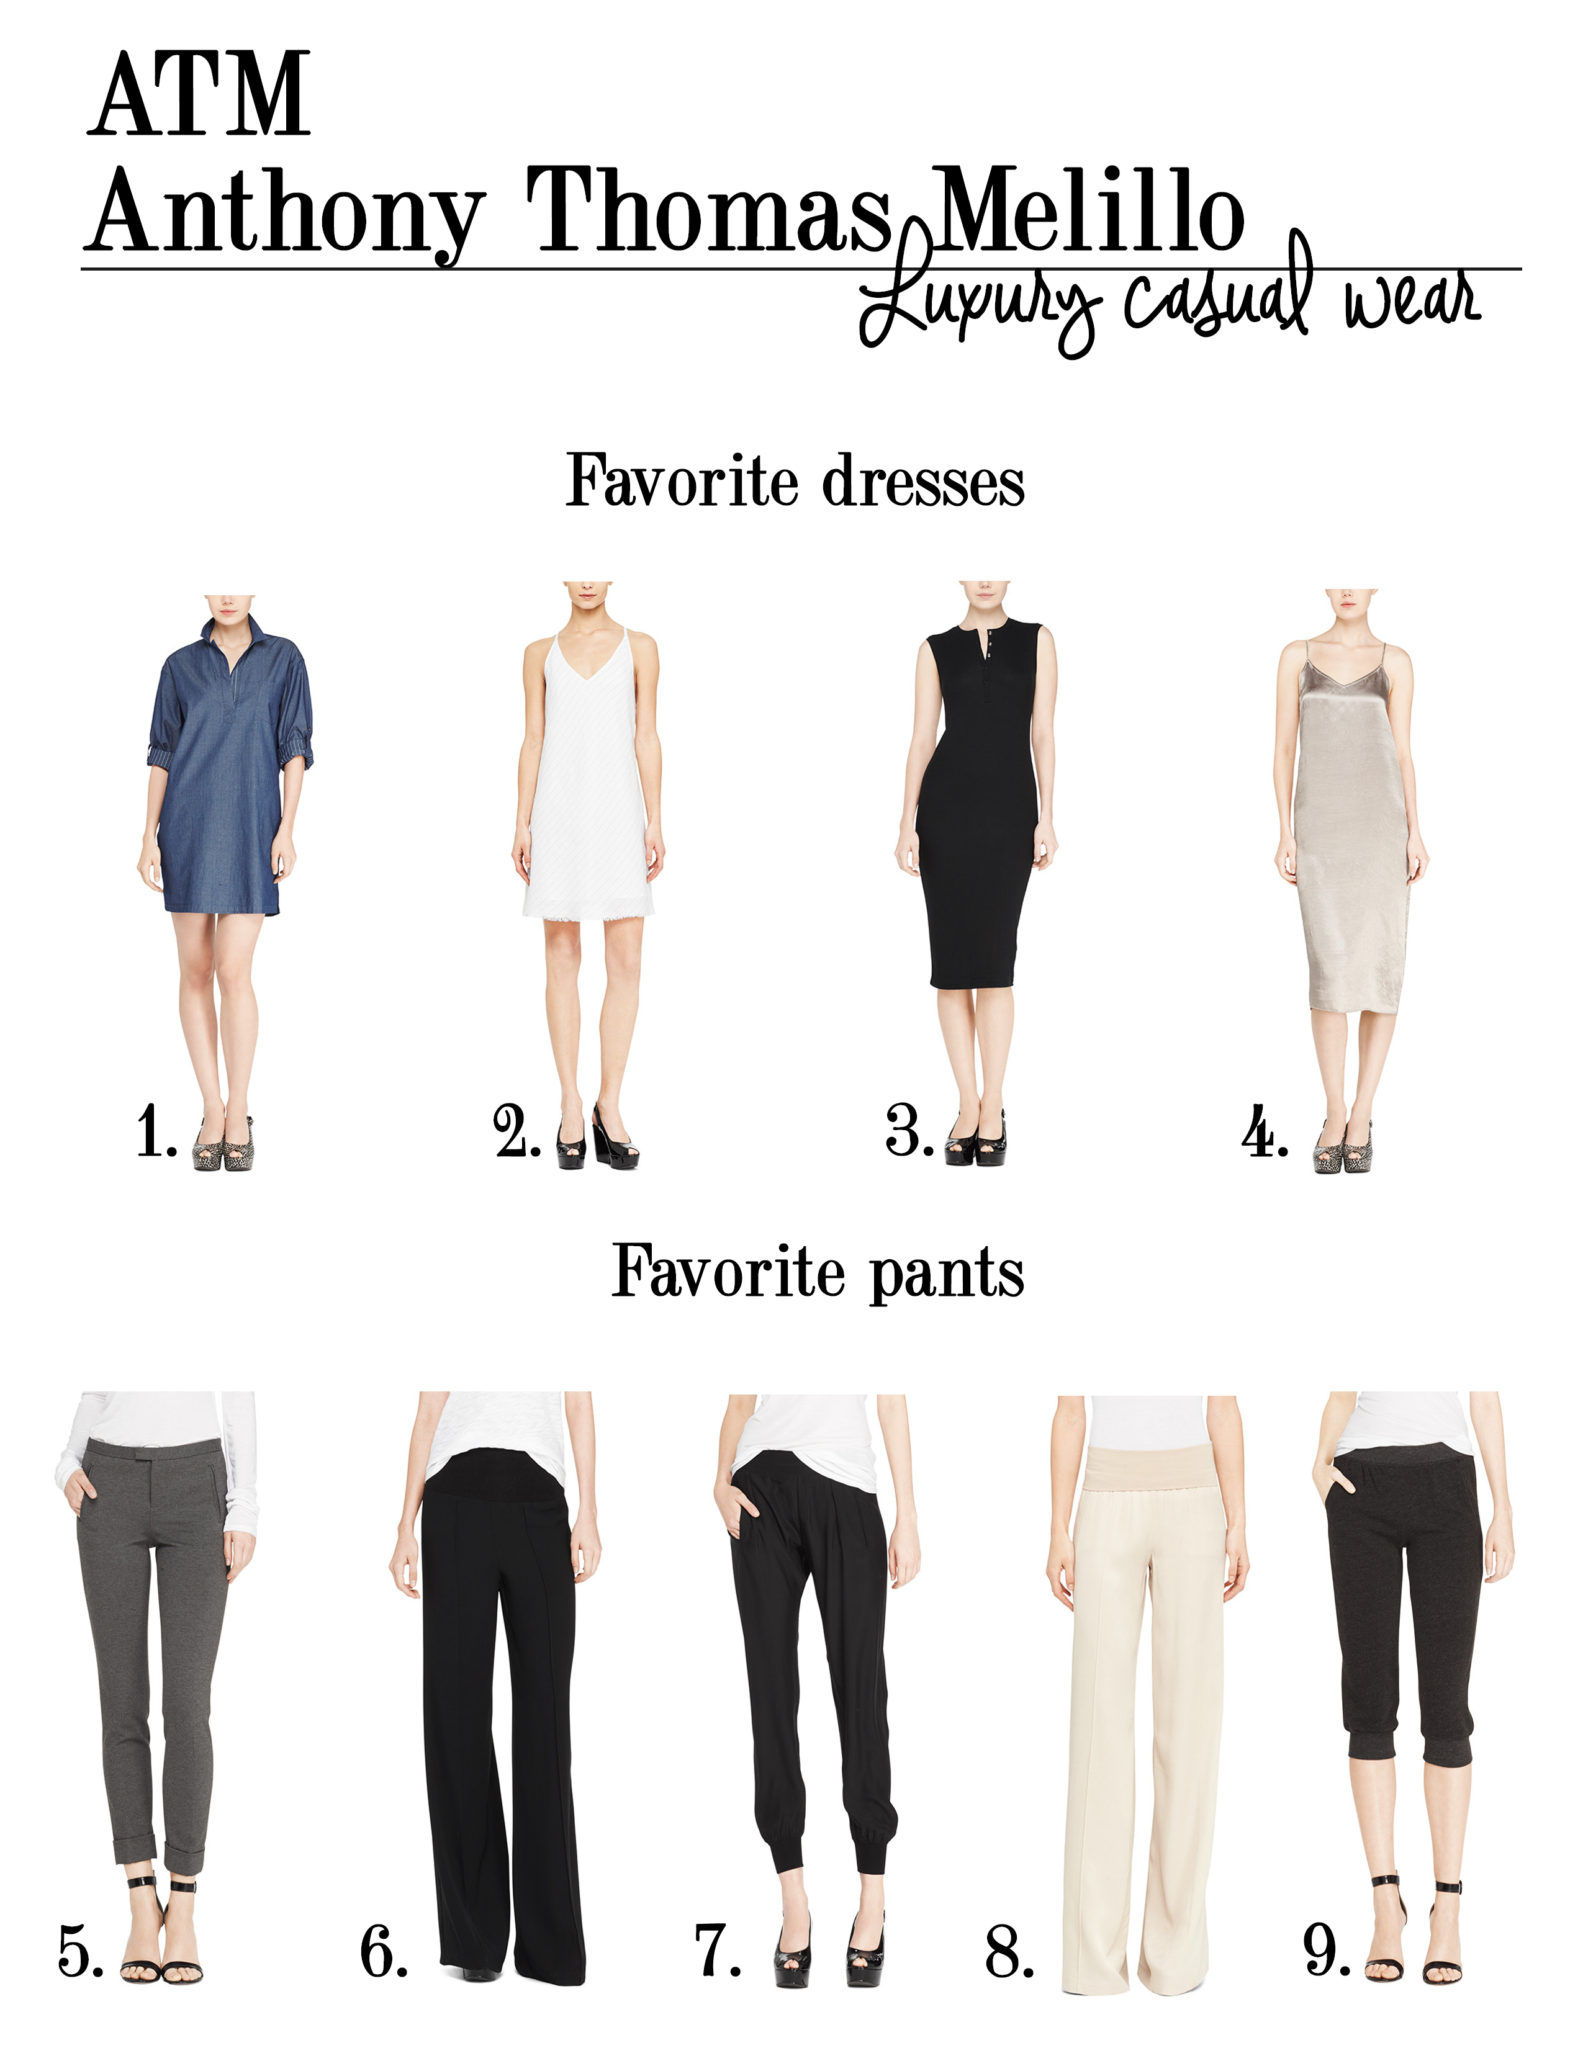 ATM Athony Thomas Meillo favorite dresses and pants